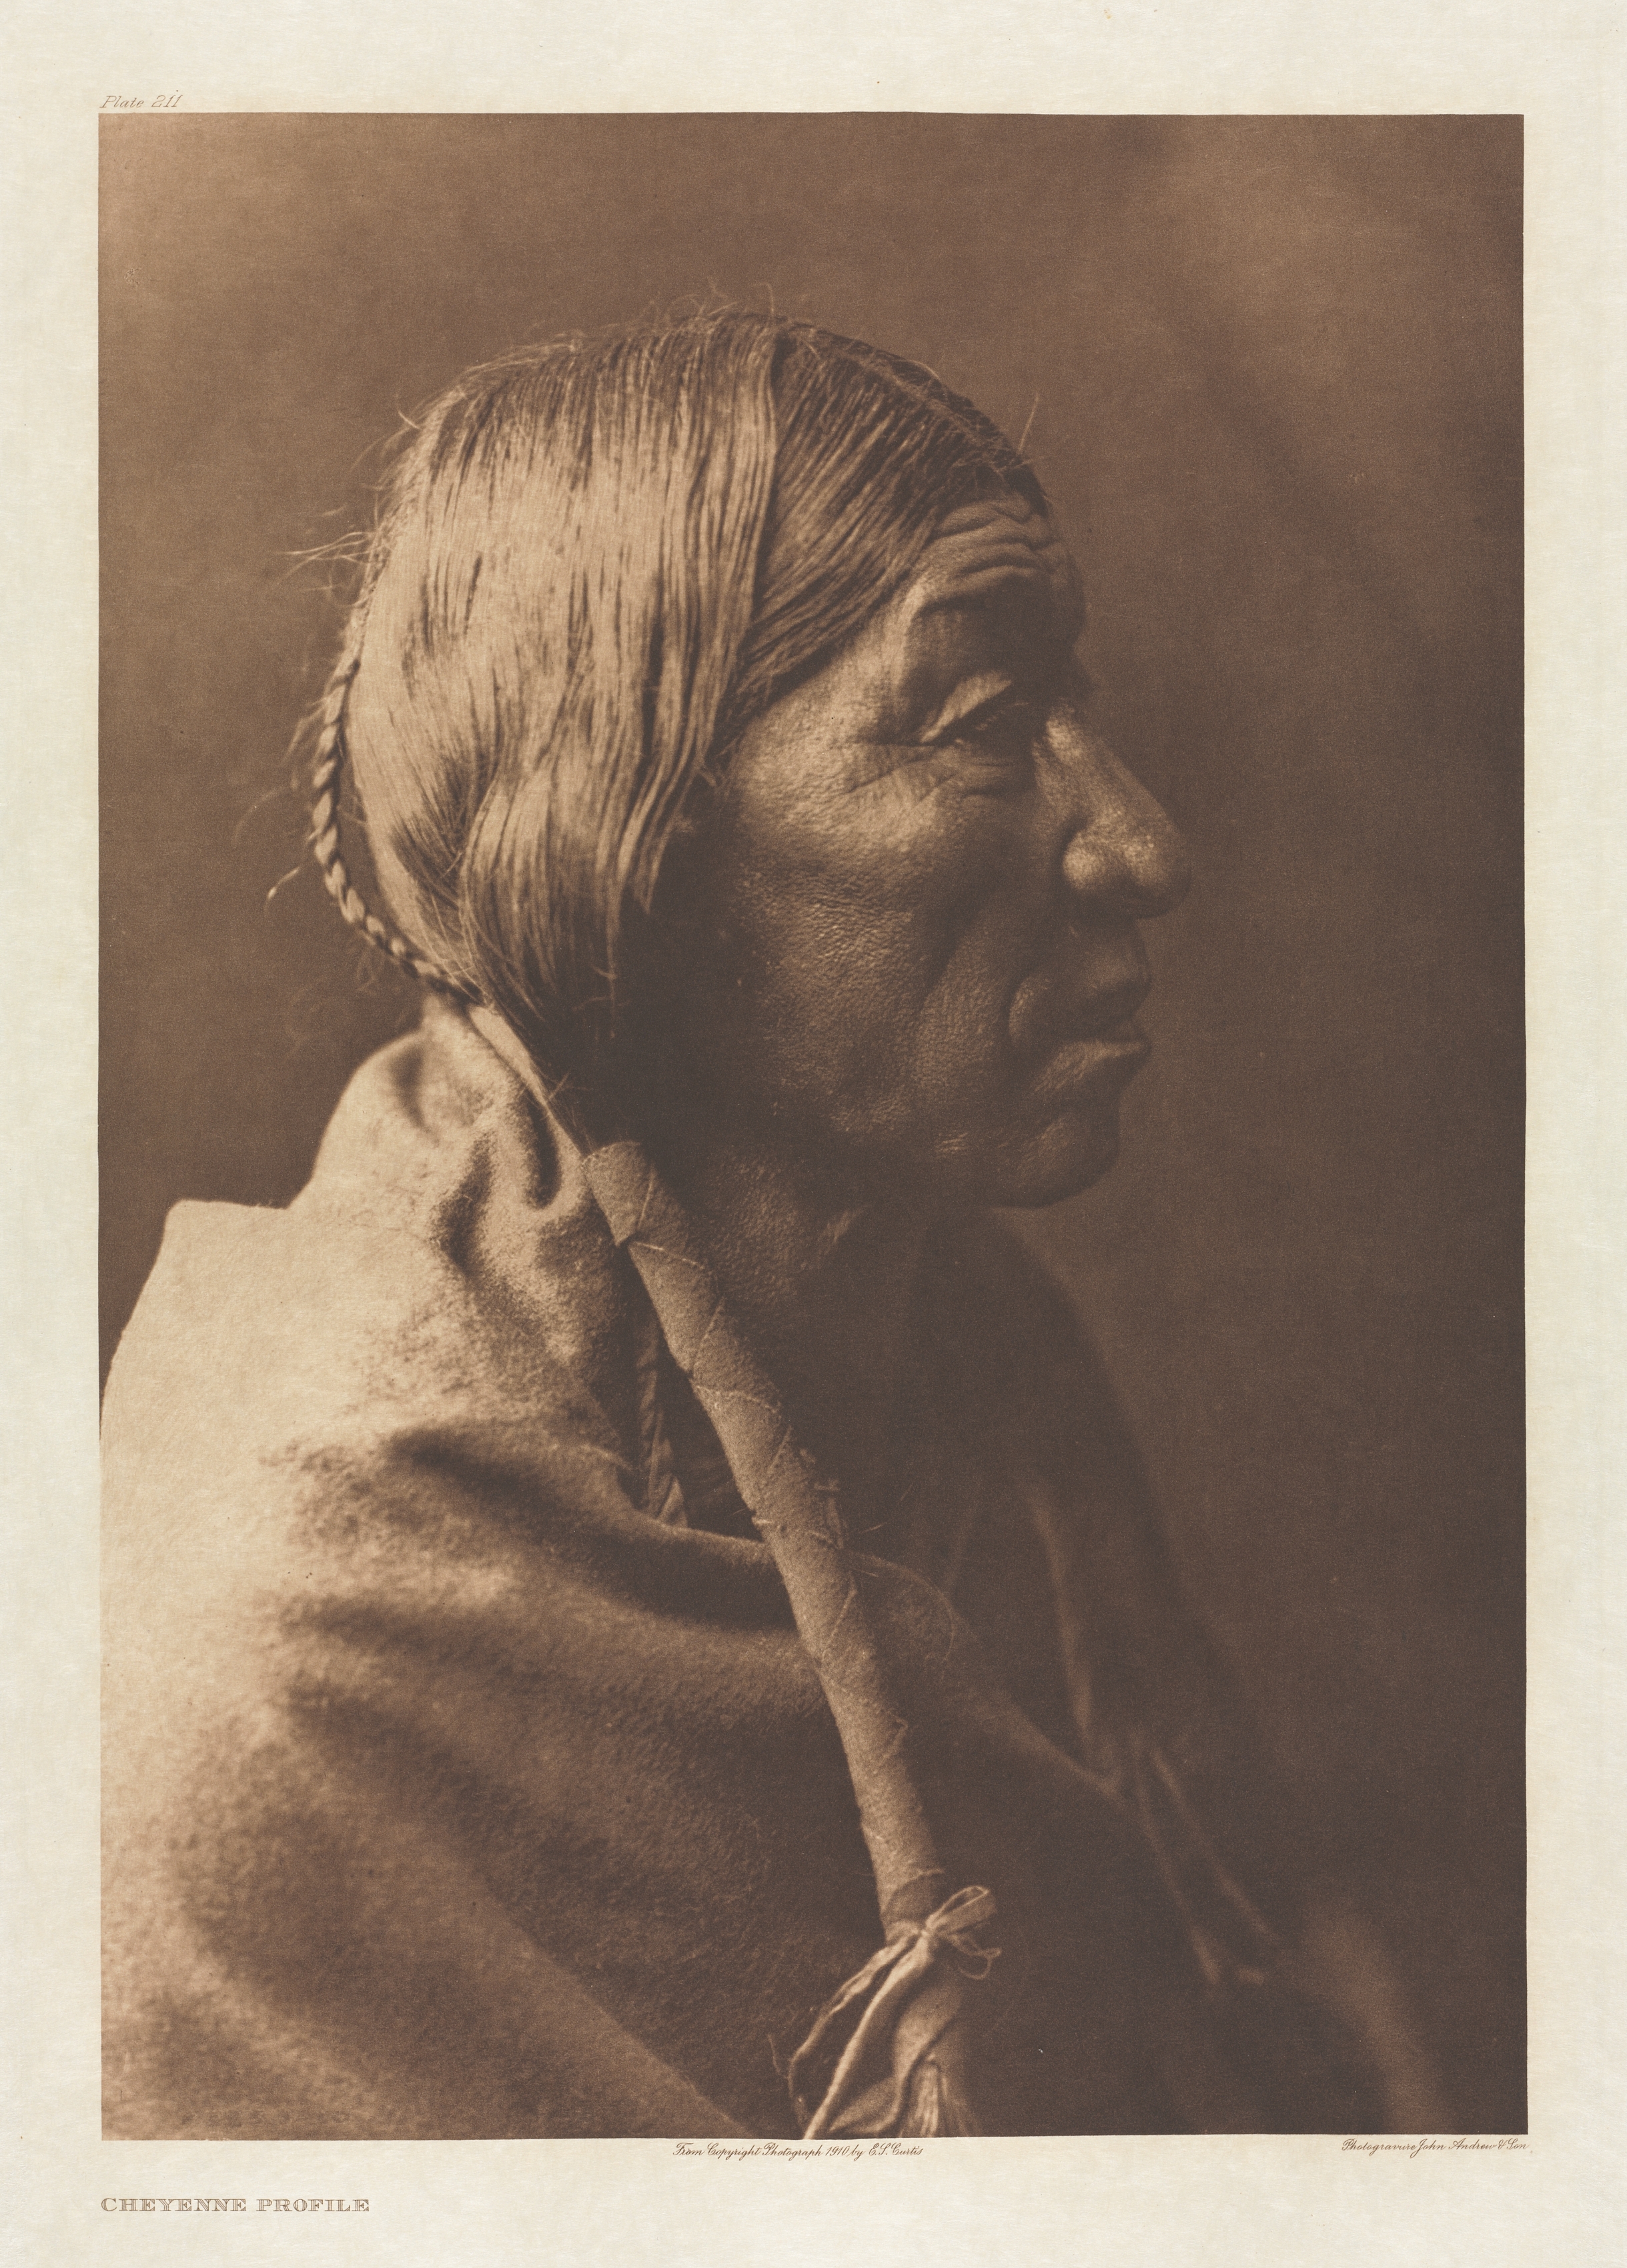 Portfolio VI, Plate 211: Cheyenne Profile